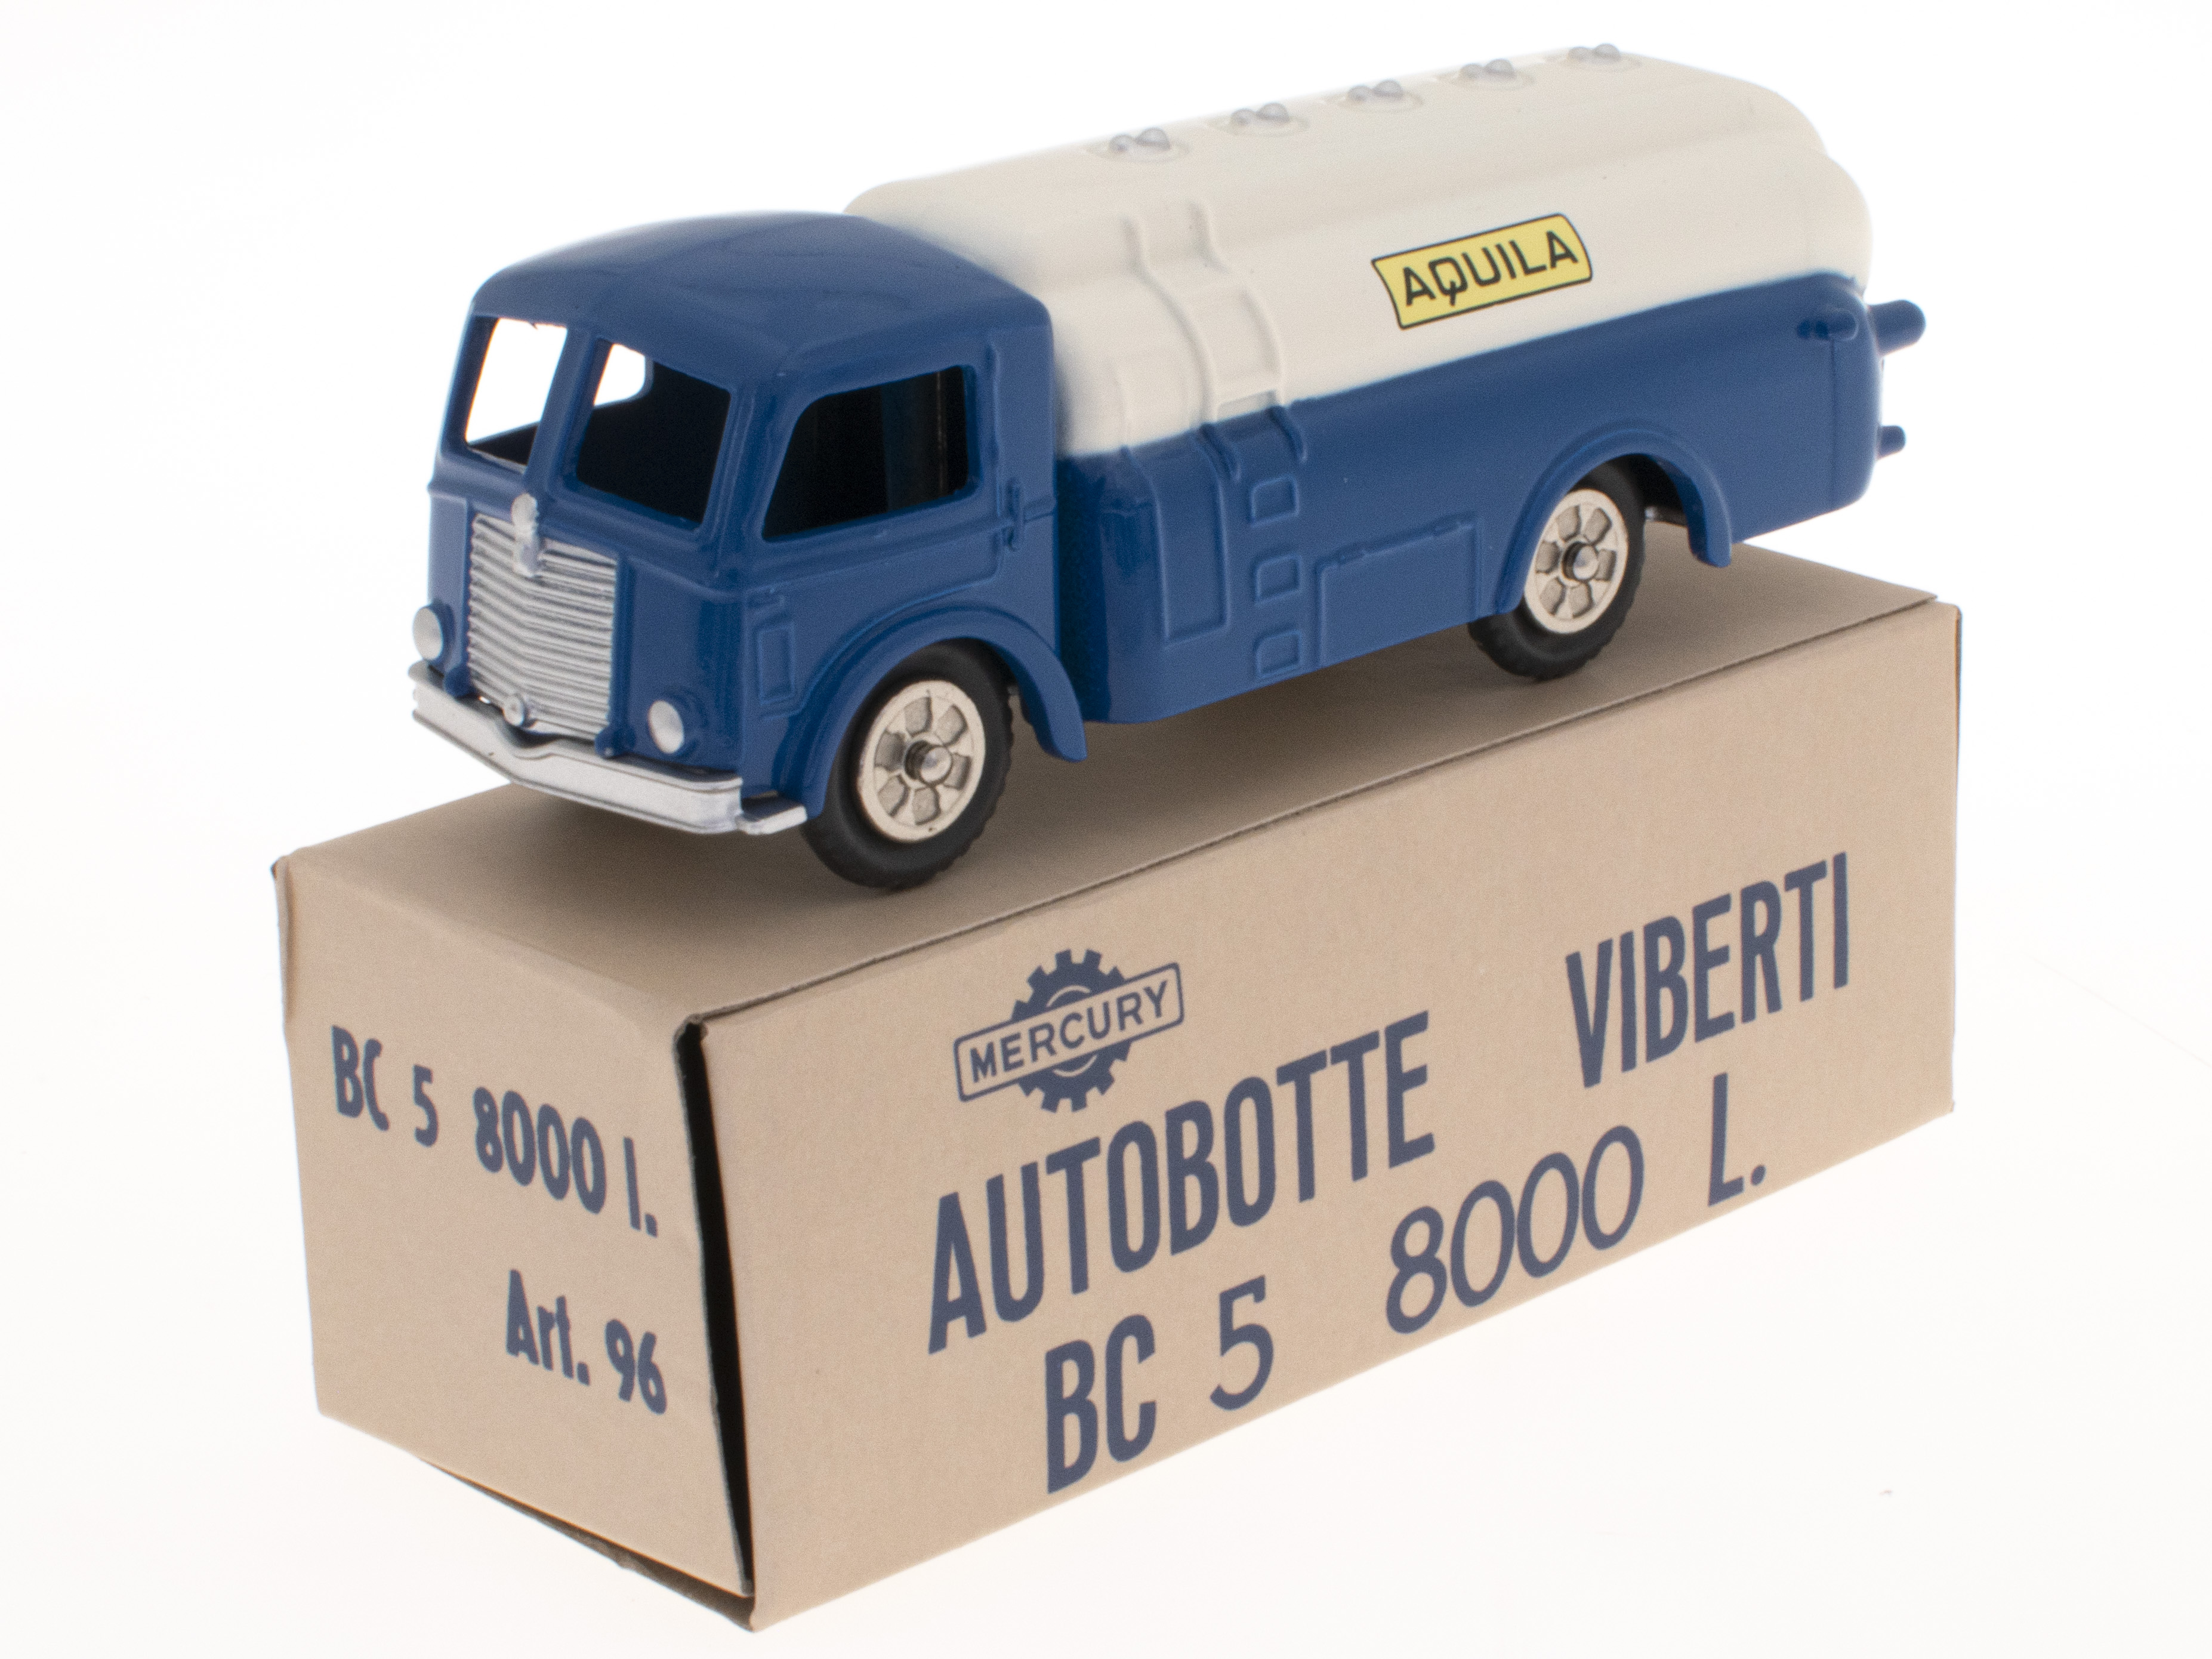 Autobotte Viberti BC 5 8000 l.